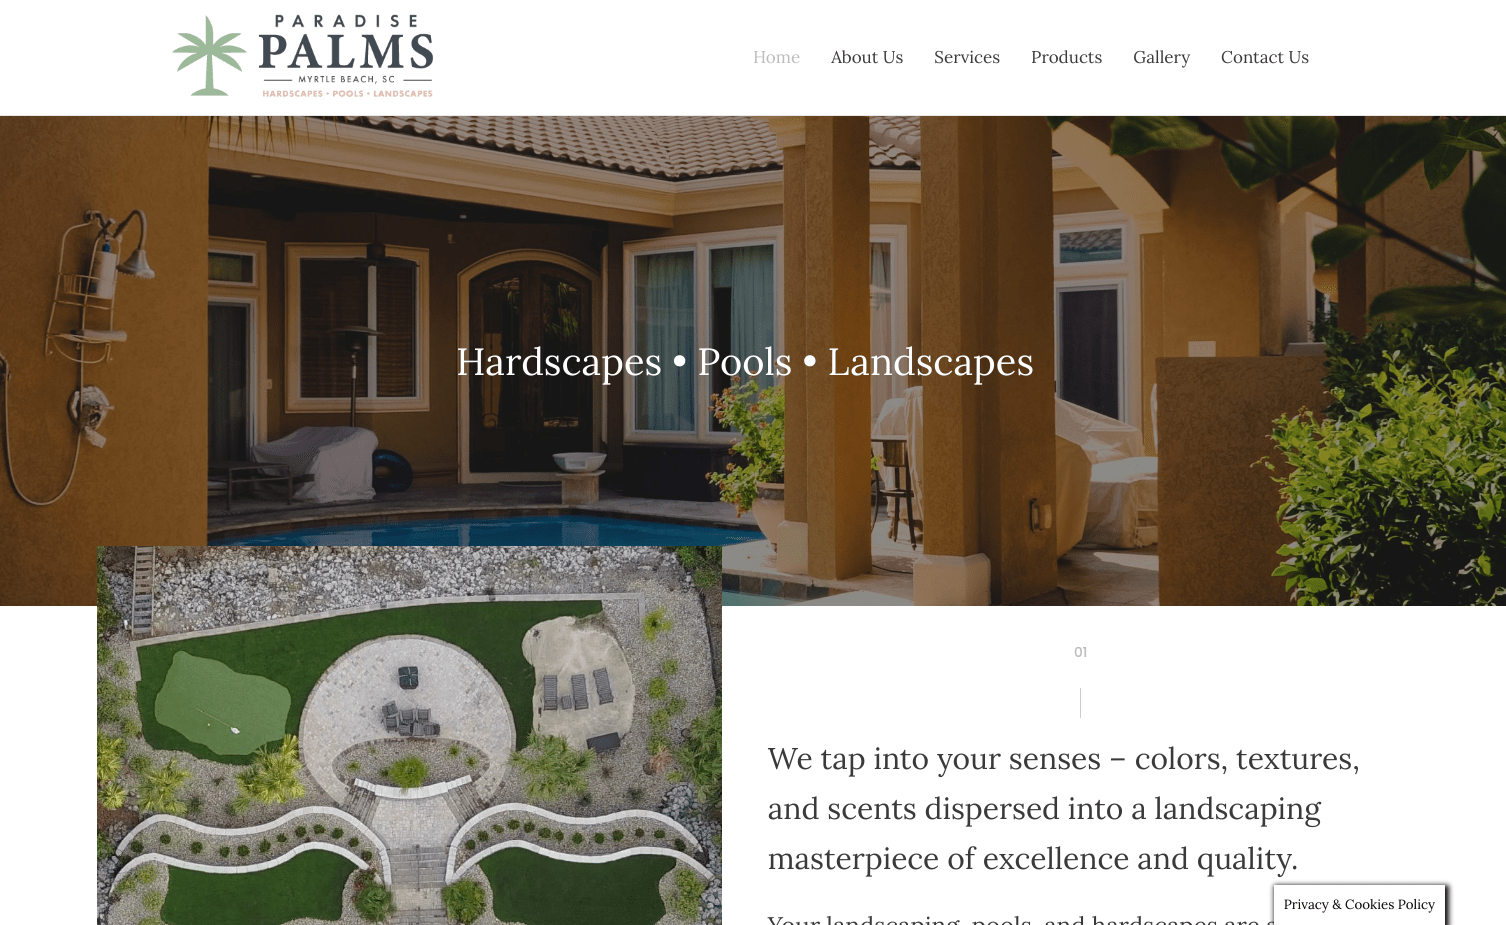 Paradise Palms Web Design